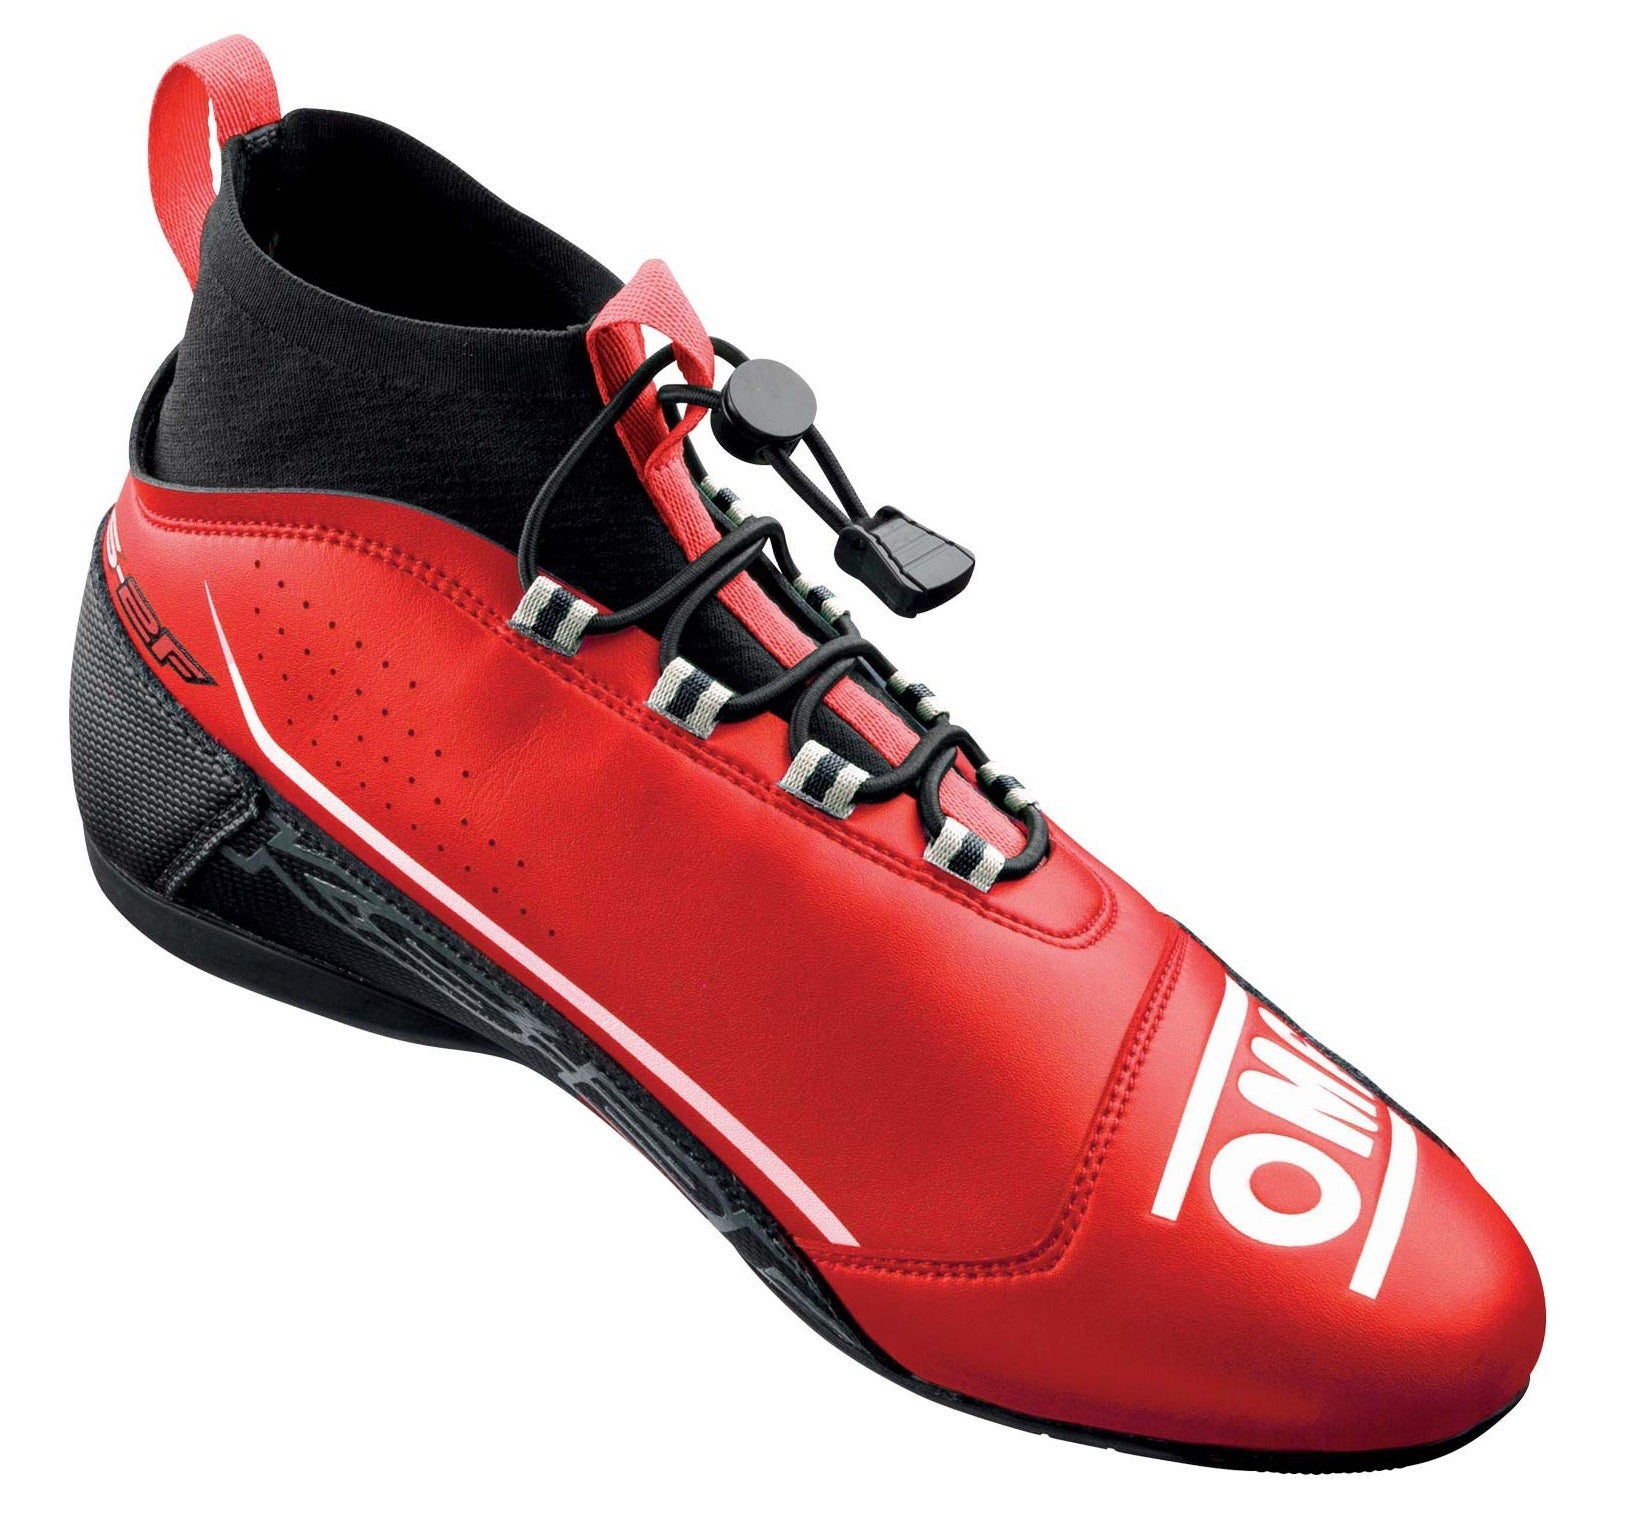 OMP KC0-0830-A01-060-44 KS-2F Karting shoes, red/black, size 44 Photo-1 